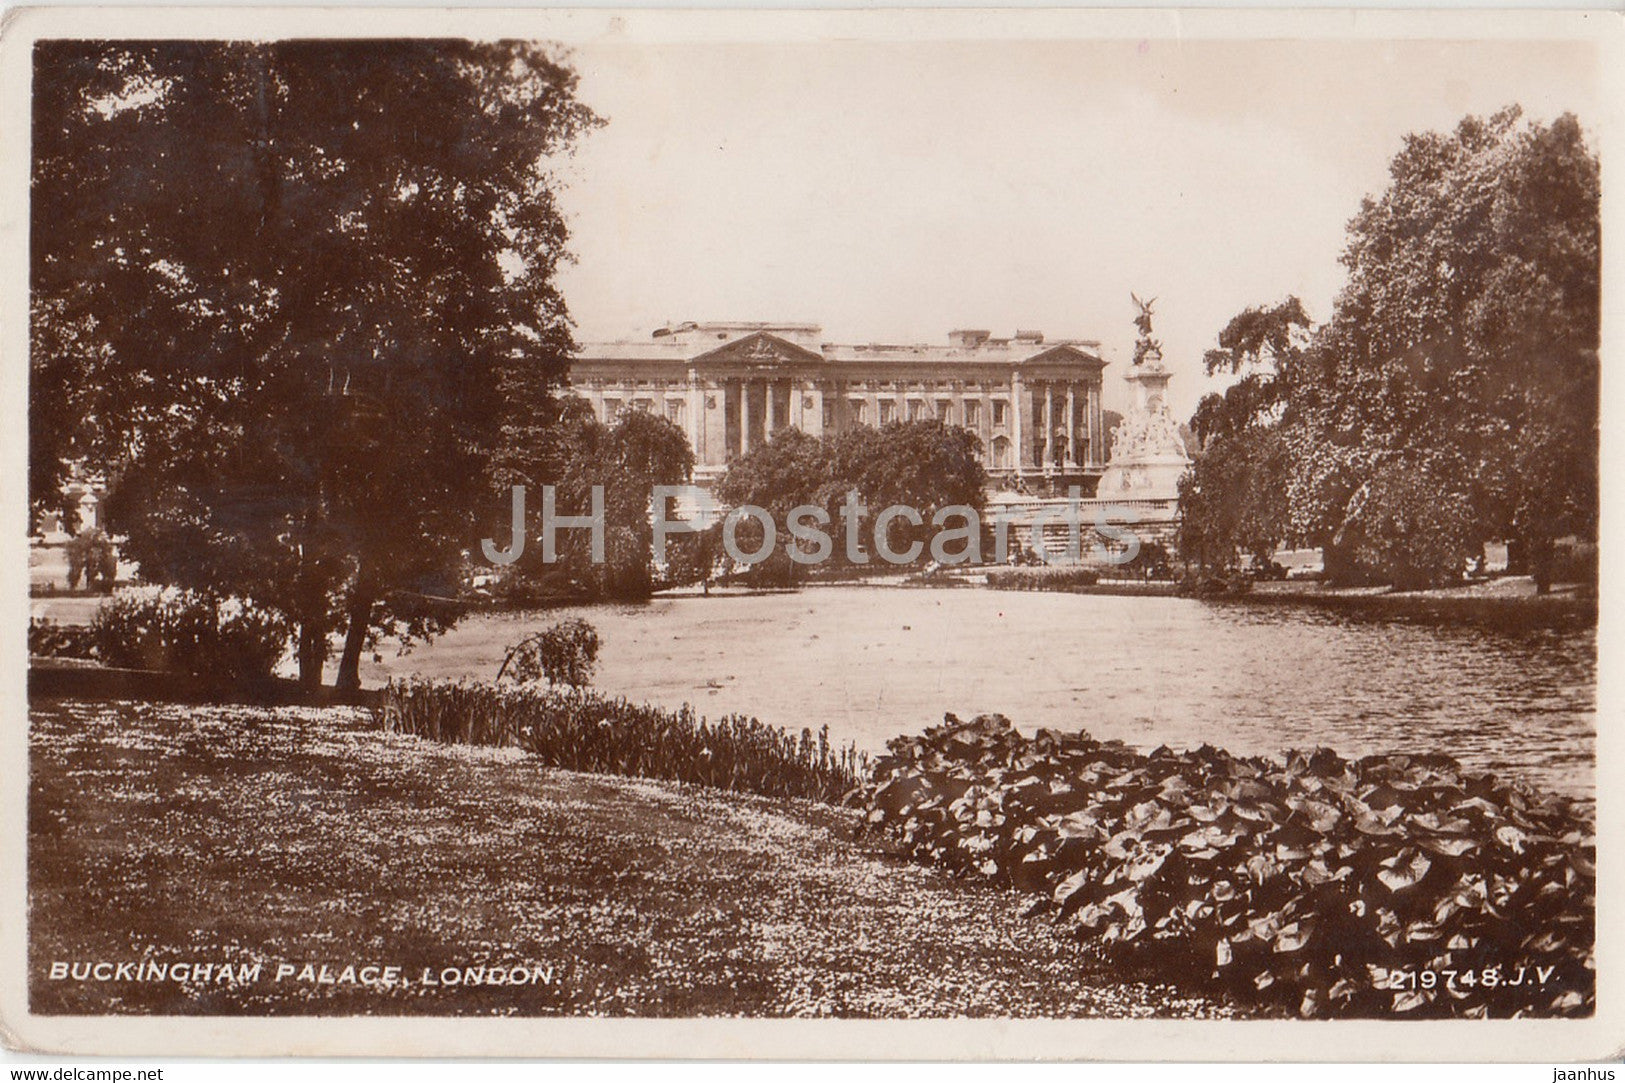 London - Buckingham Palace - 219784 - old postcard - 1937 - England - United Kingdom - used - JH Postcards